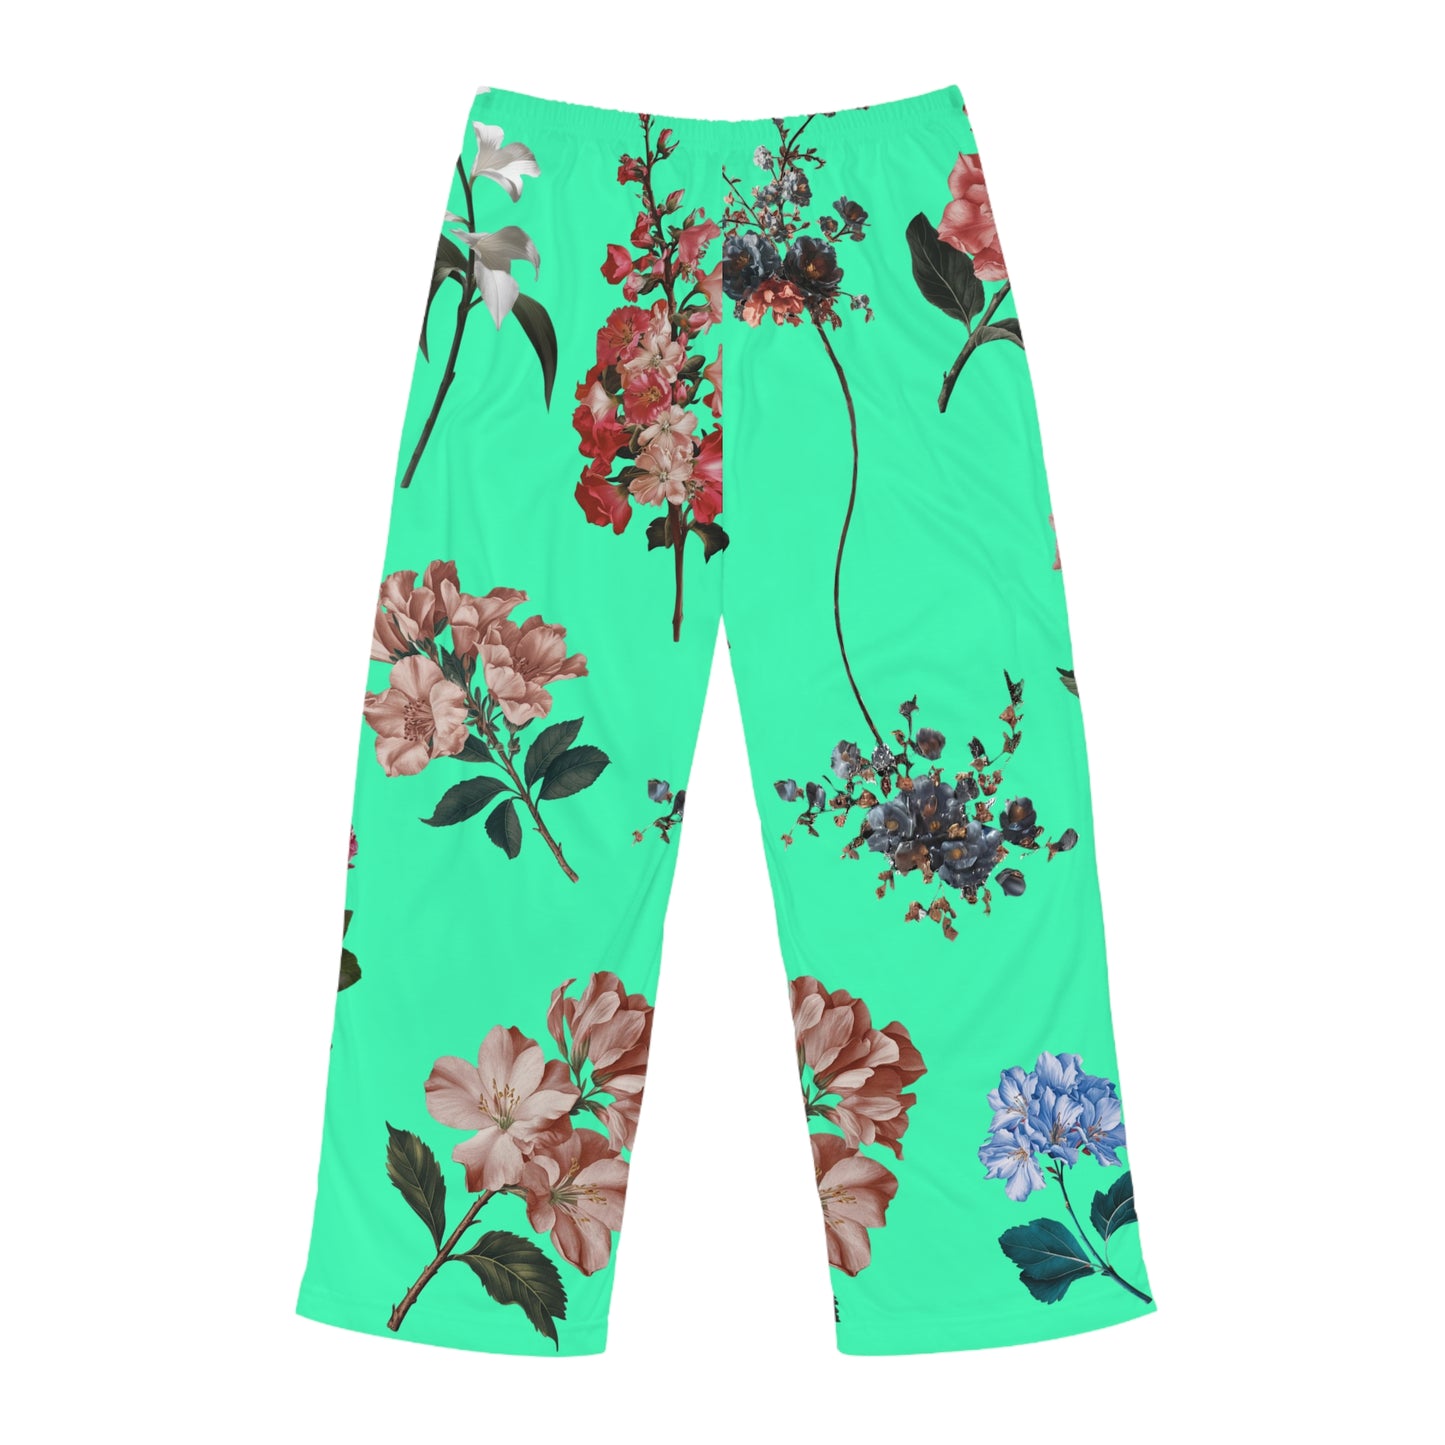 Botanicals on Turquoise - men's Lounge Pants